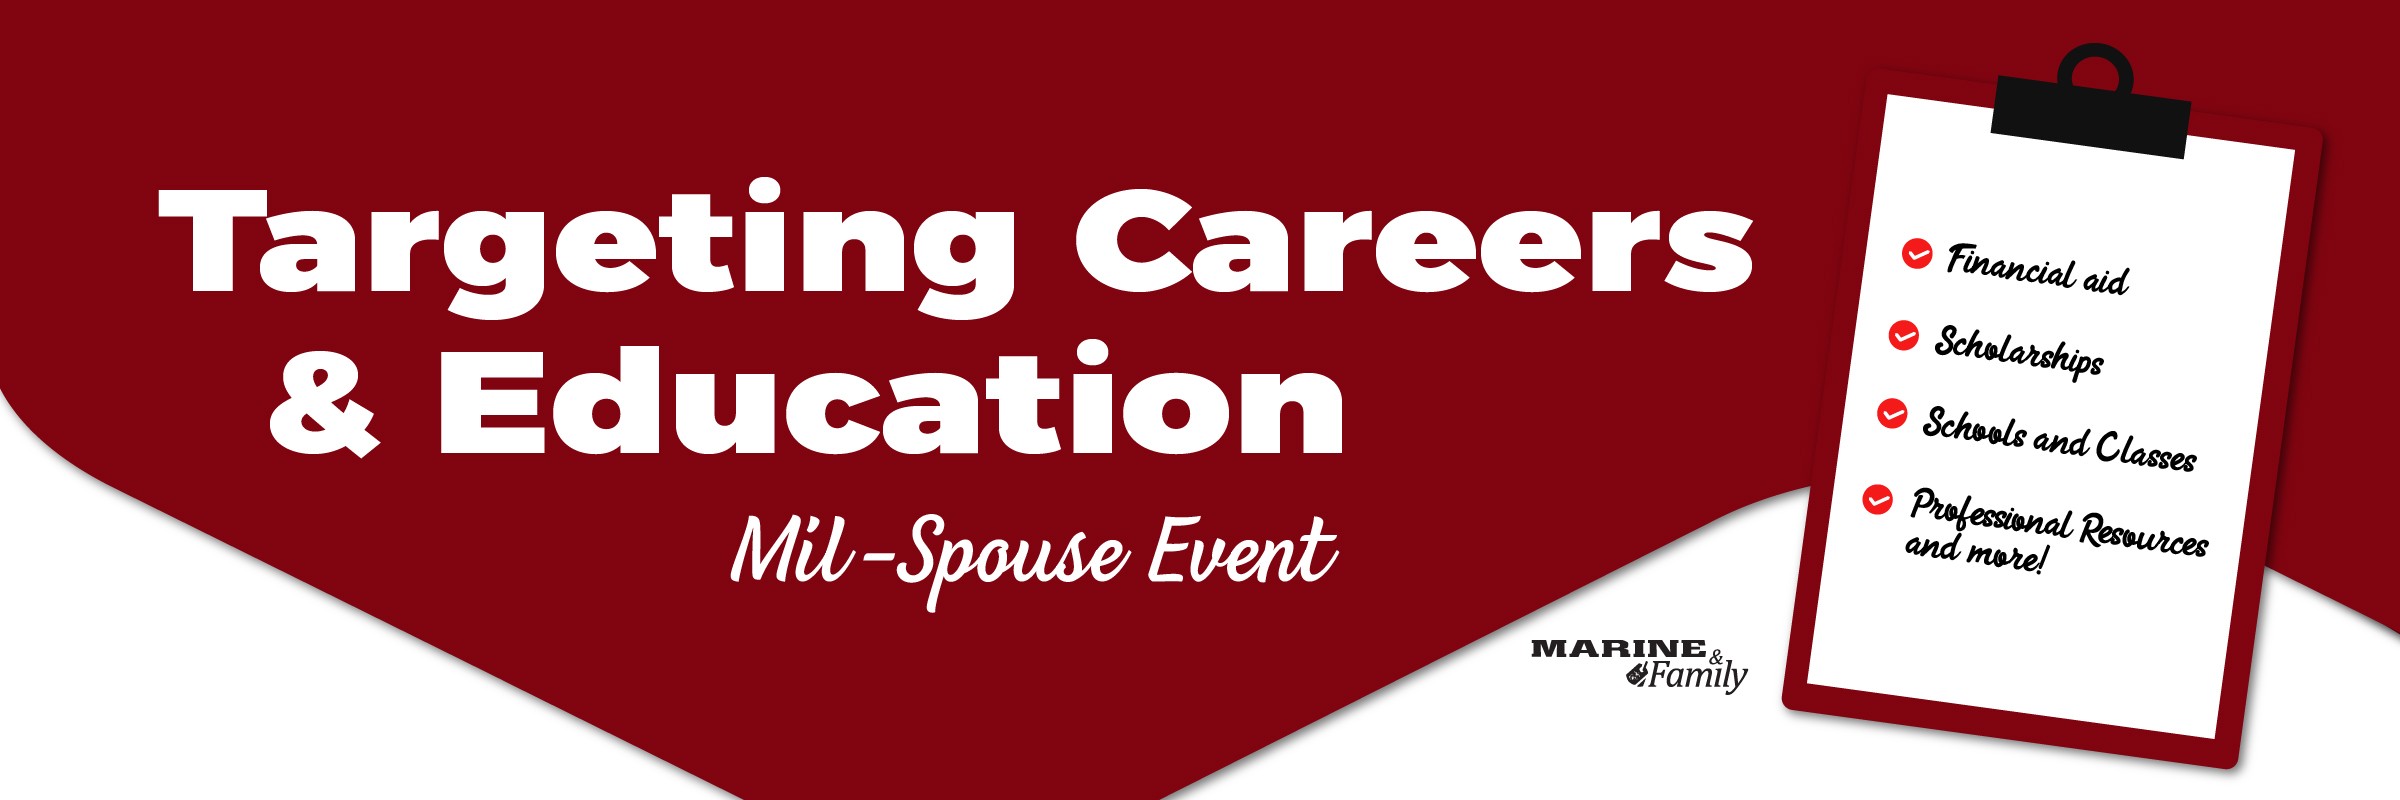 24-0061 MilSpouse Event Targeting Careers & Education _Website Desktop Carousel.jpg